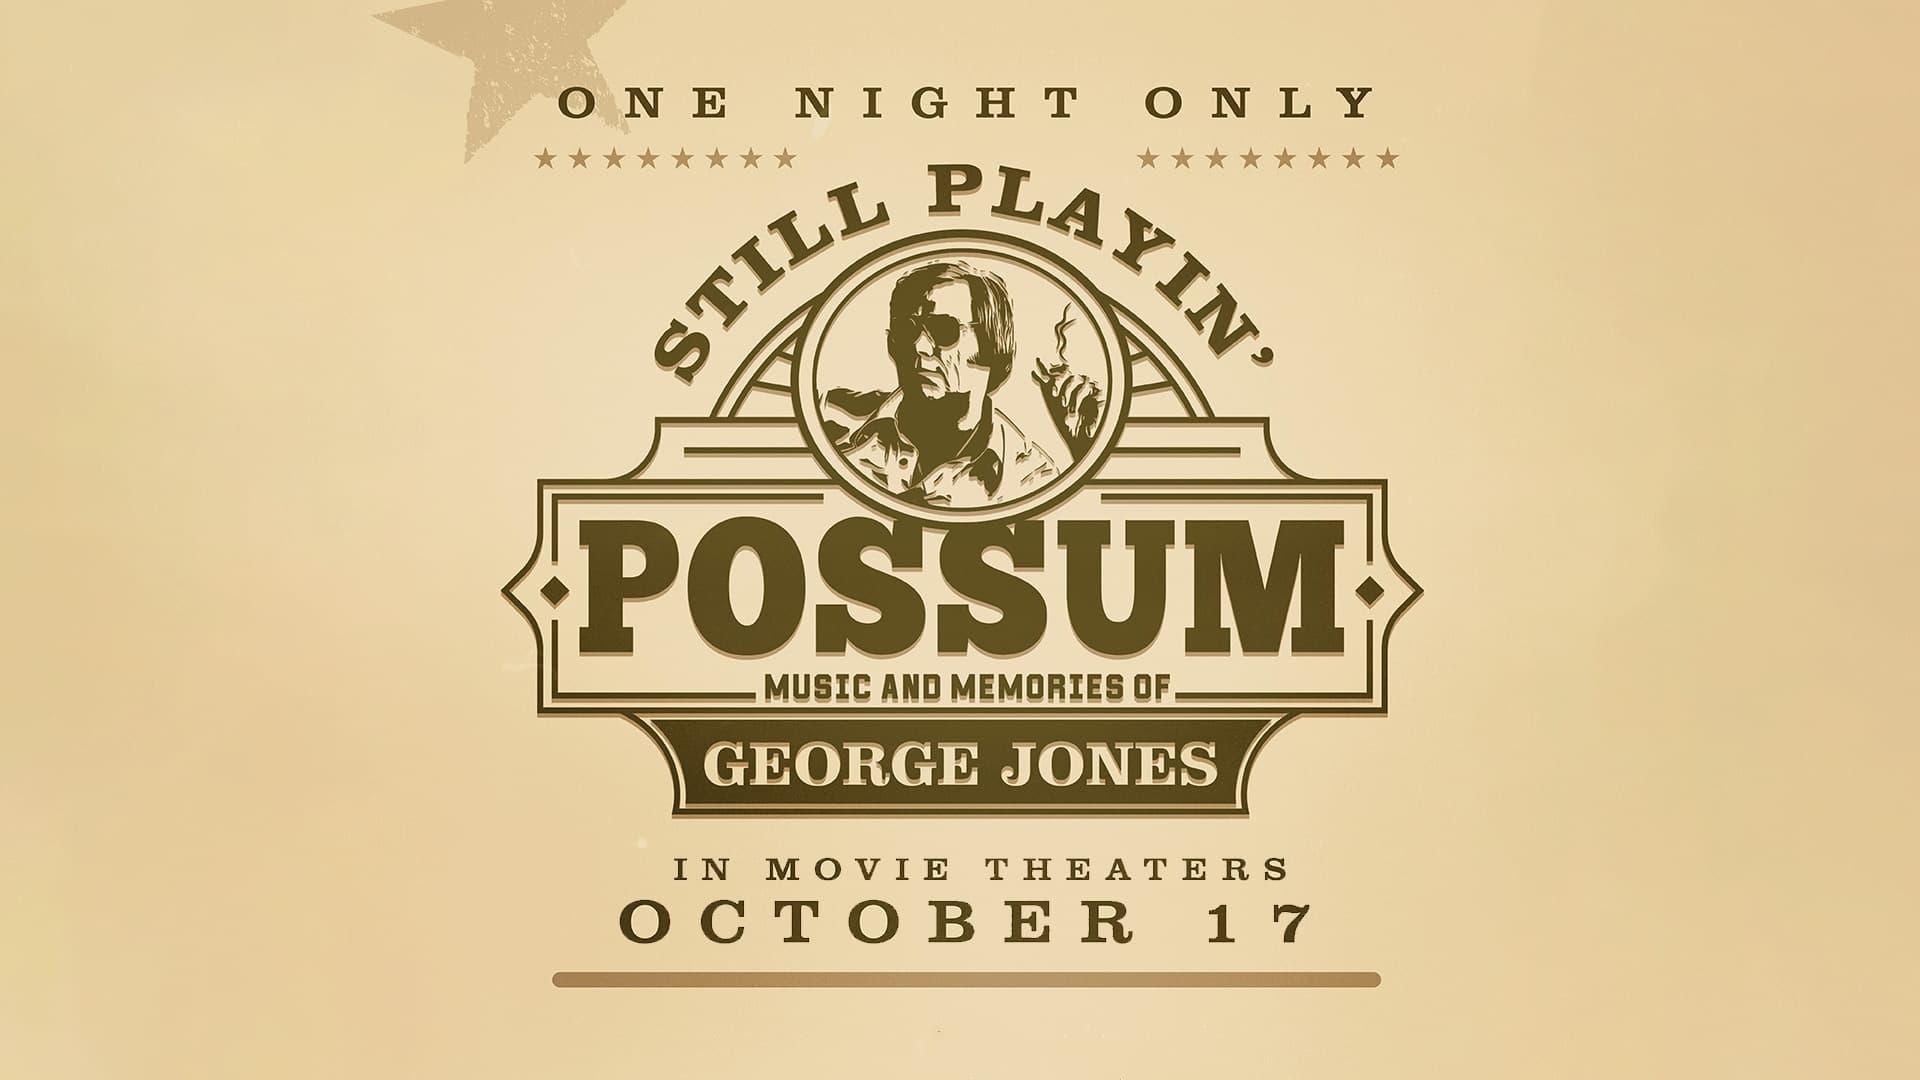 Still Playin' Possum: Music and Memories of George Jones backdrop